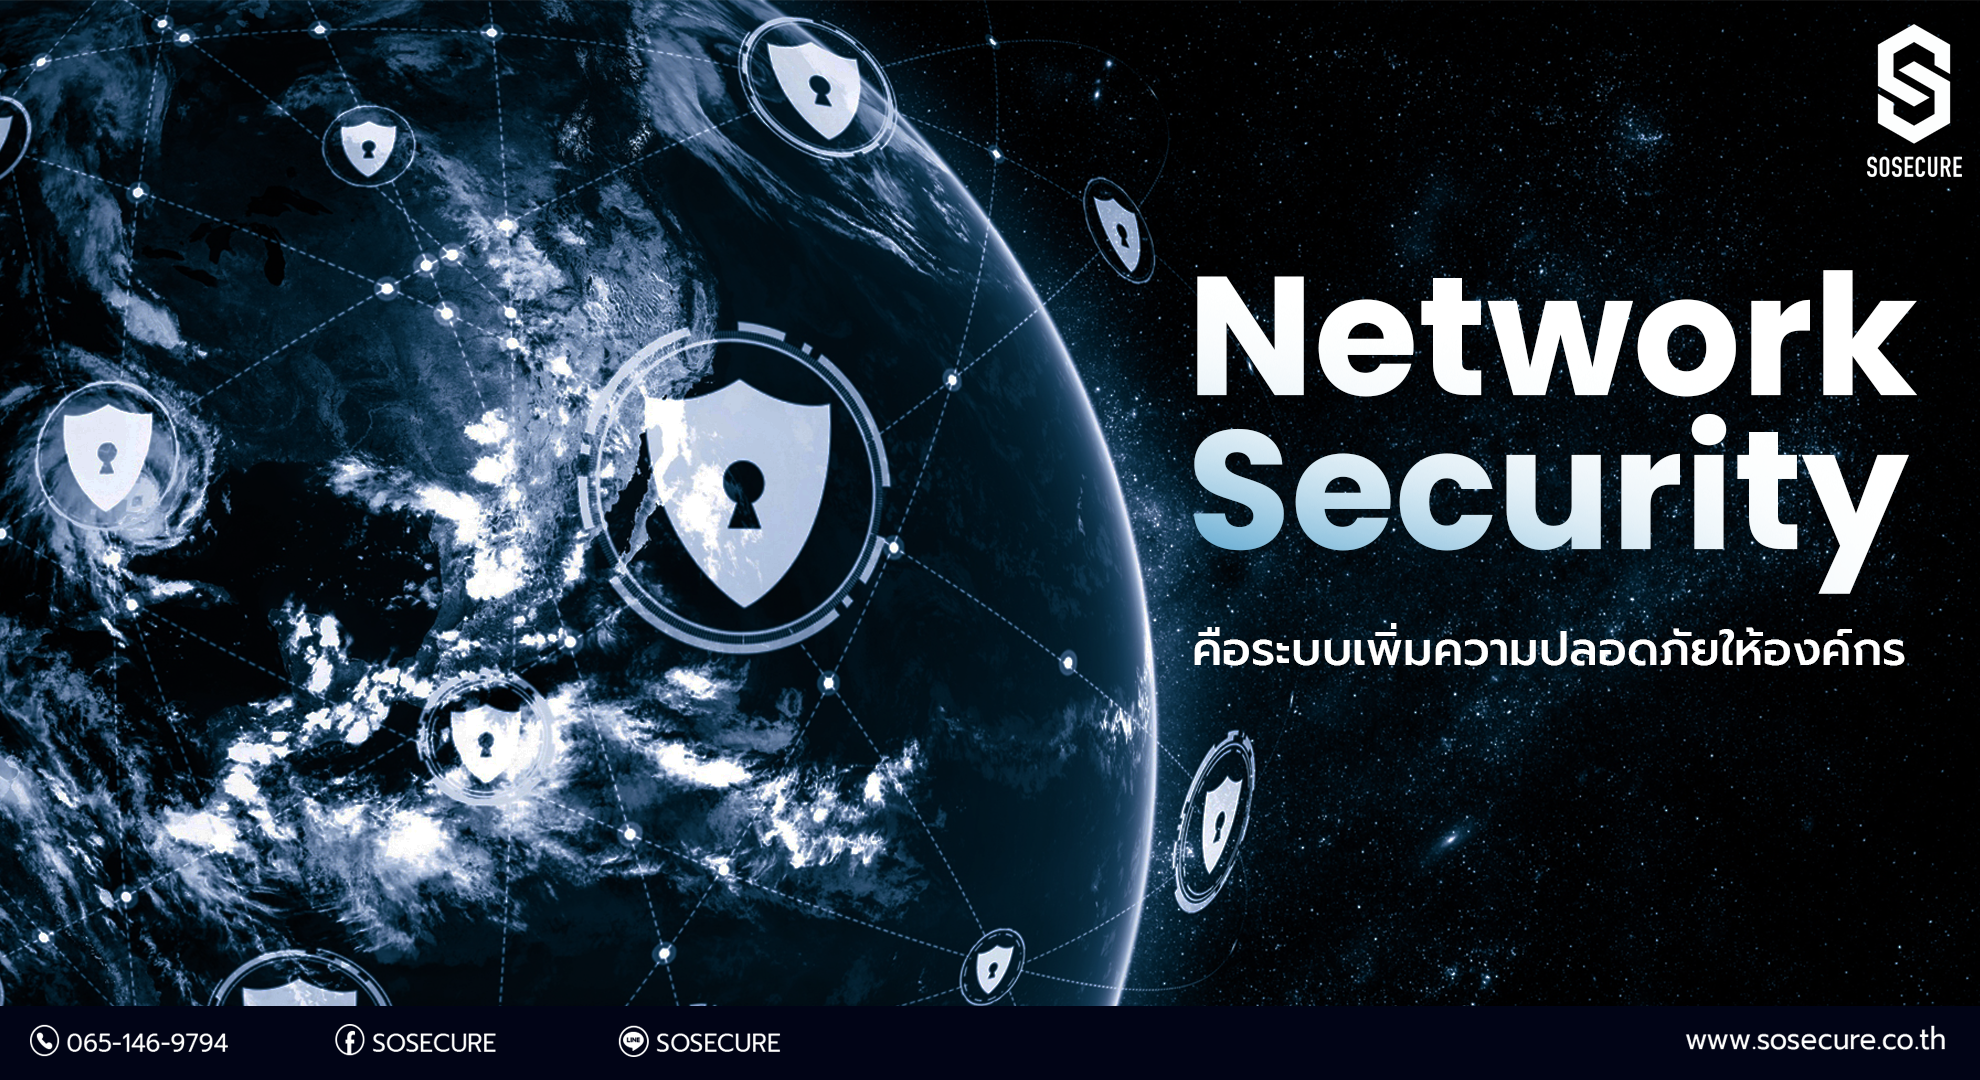 Network Security คือระบบความปลอดภัยองค์กร